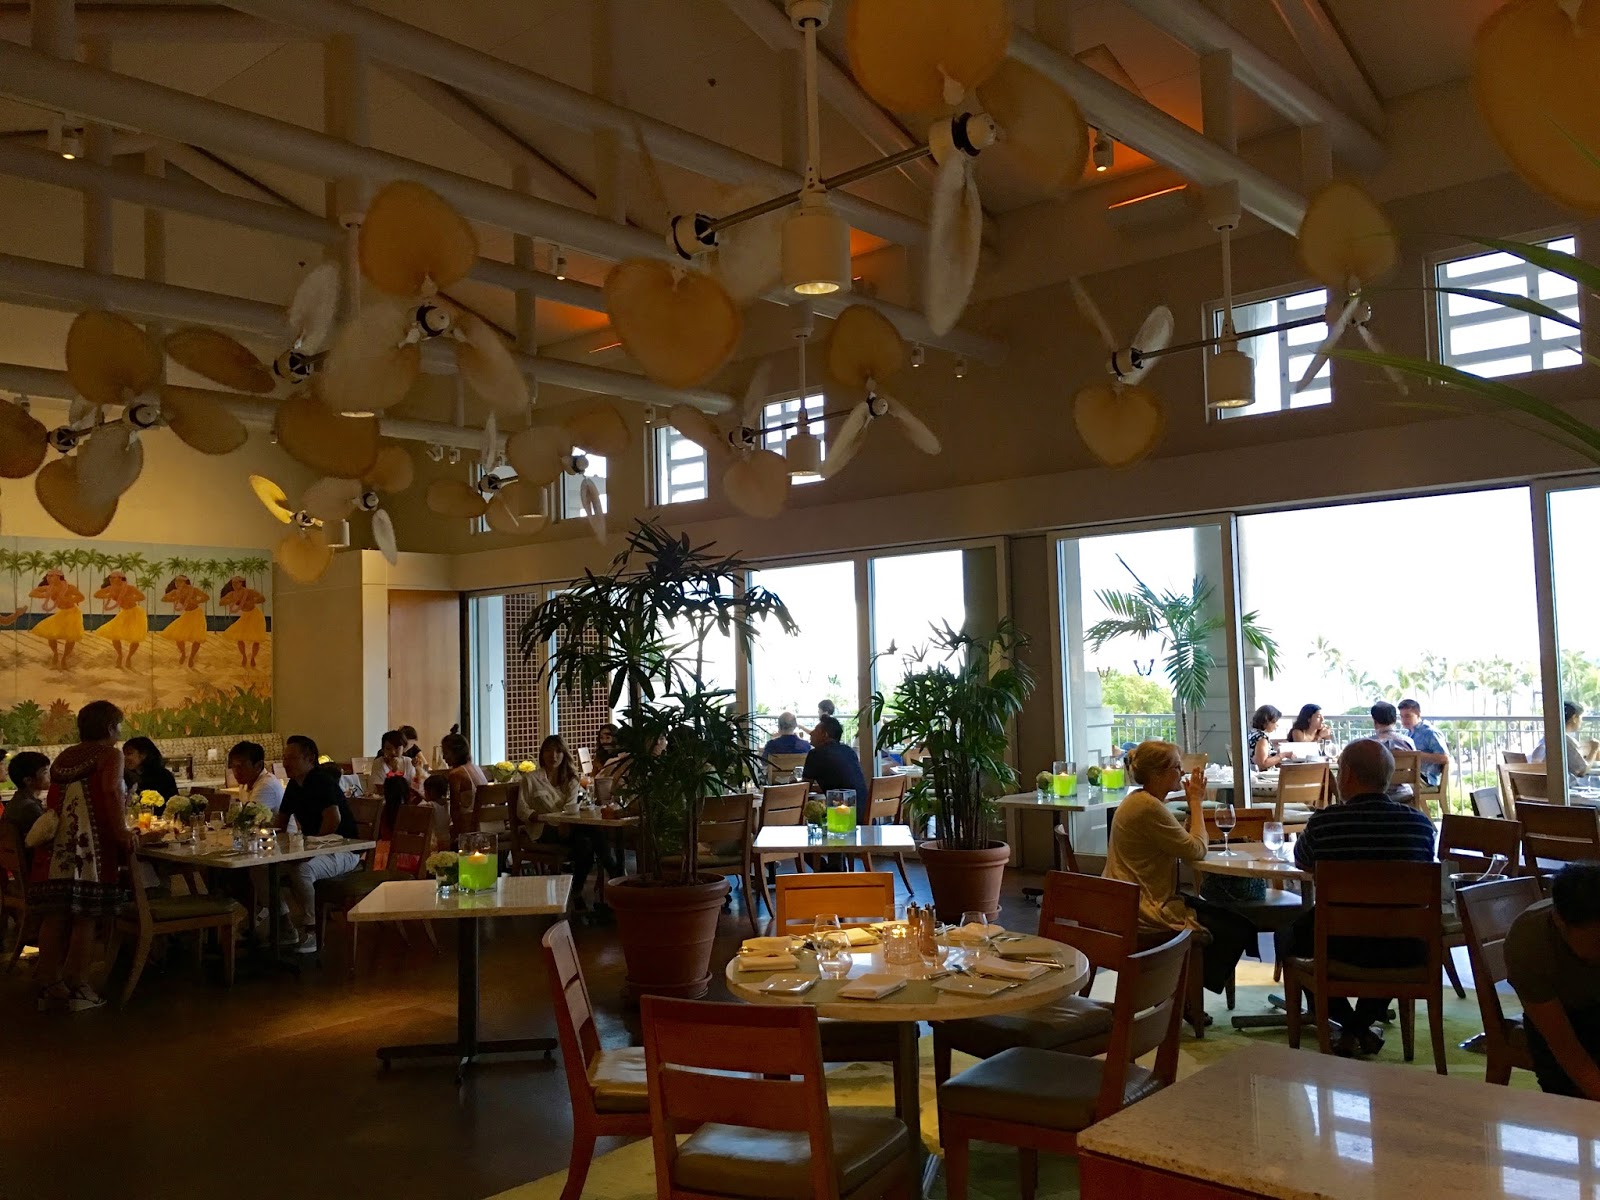 Mariposa Hawaii - A Neiman Marcus Restaurant You Should Visit